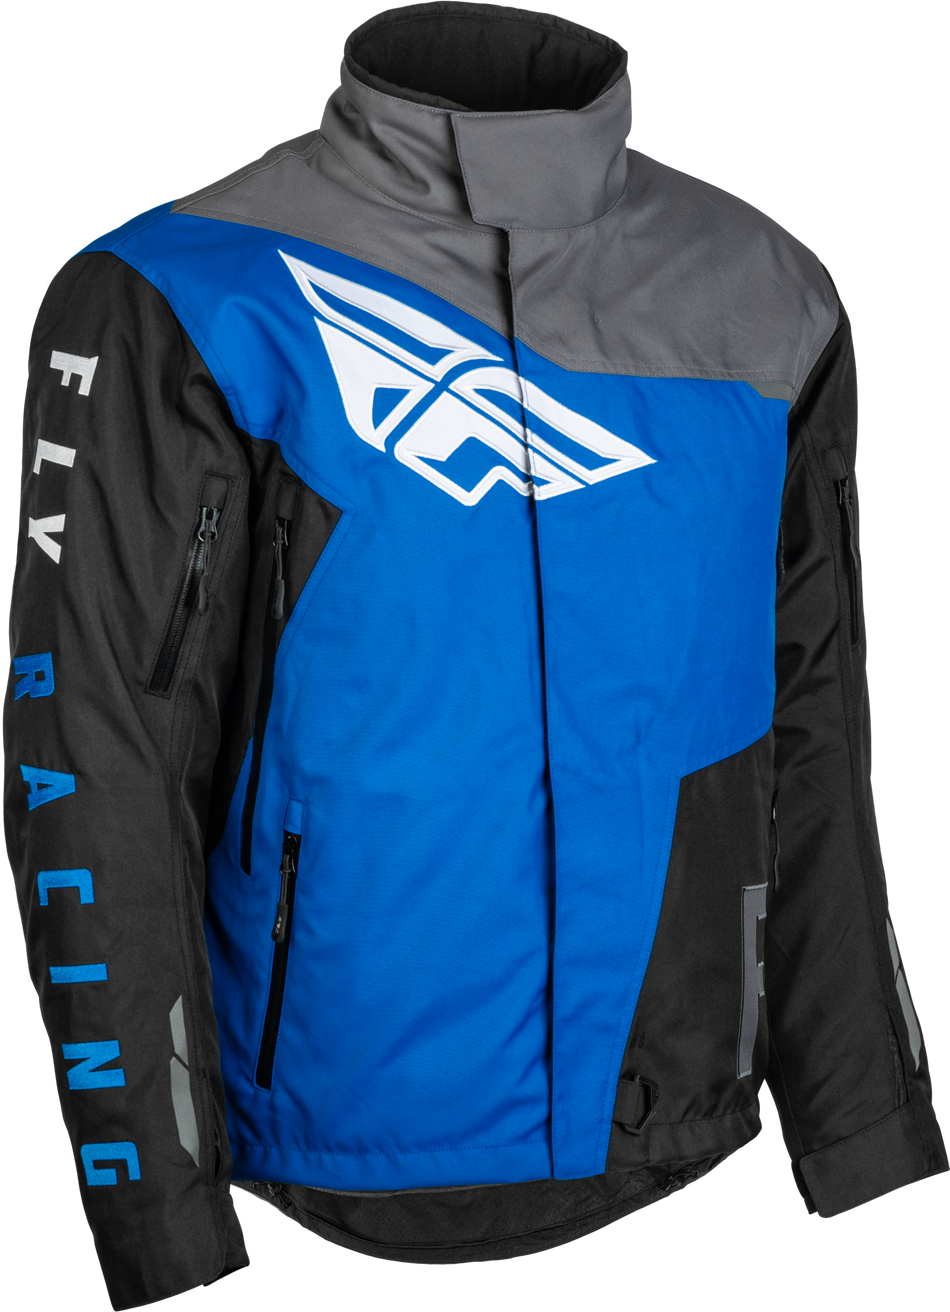 FLY RACING Snx Pro Jacket Black/Grey/Blue Xl 470-4116X